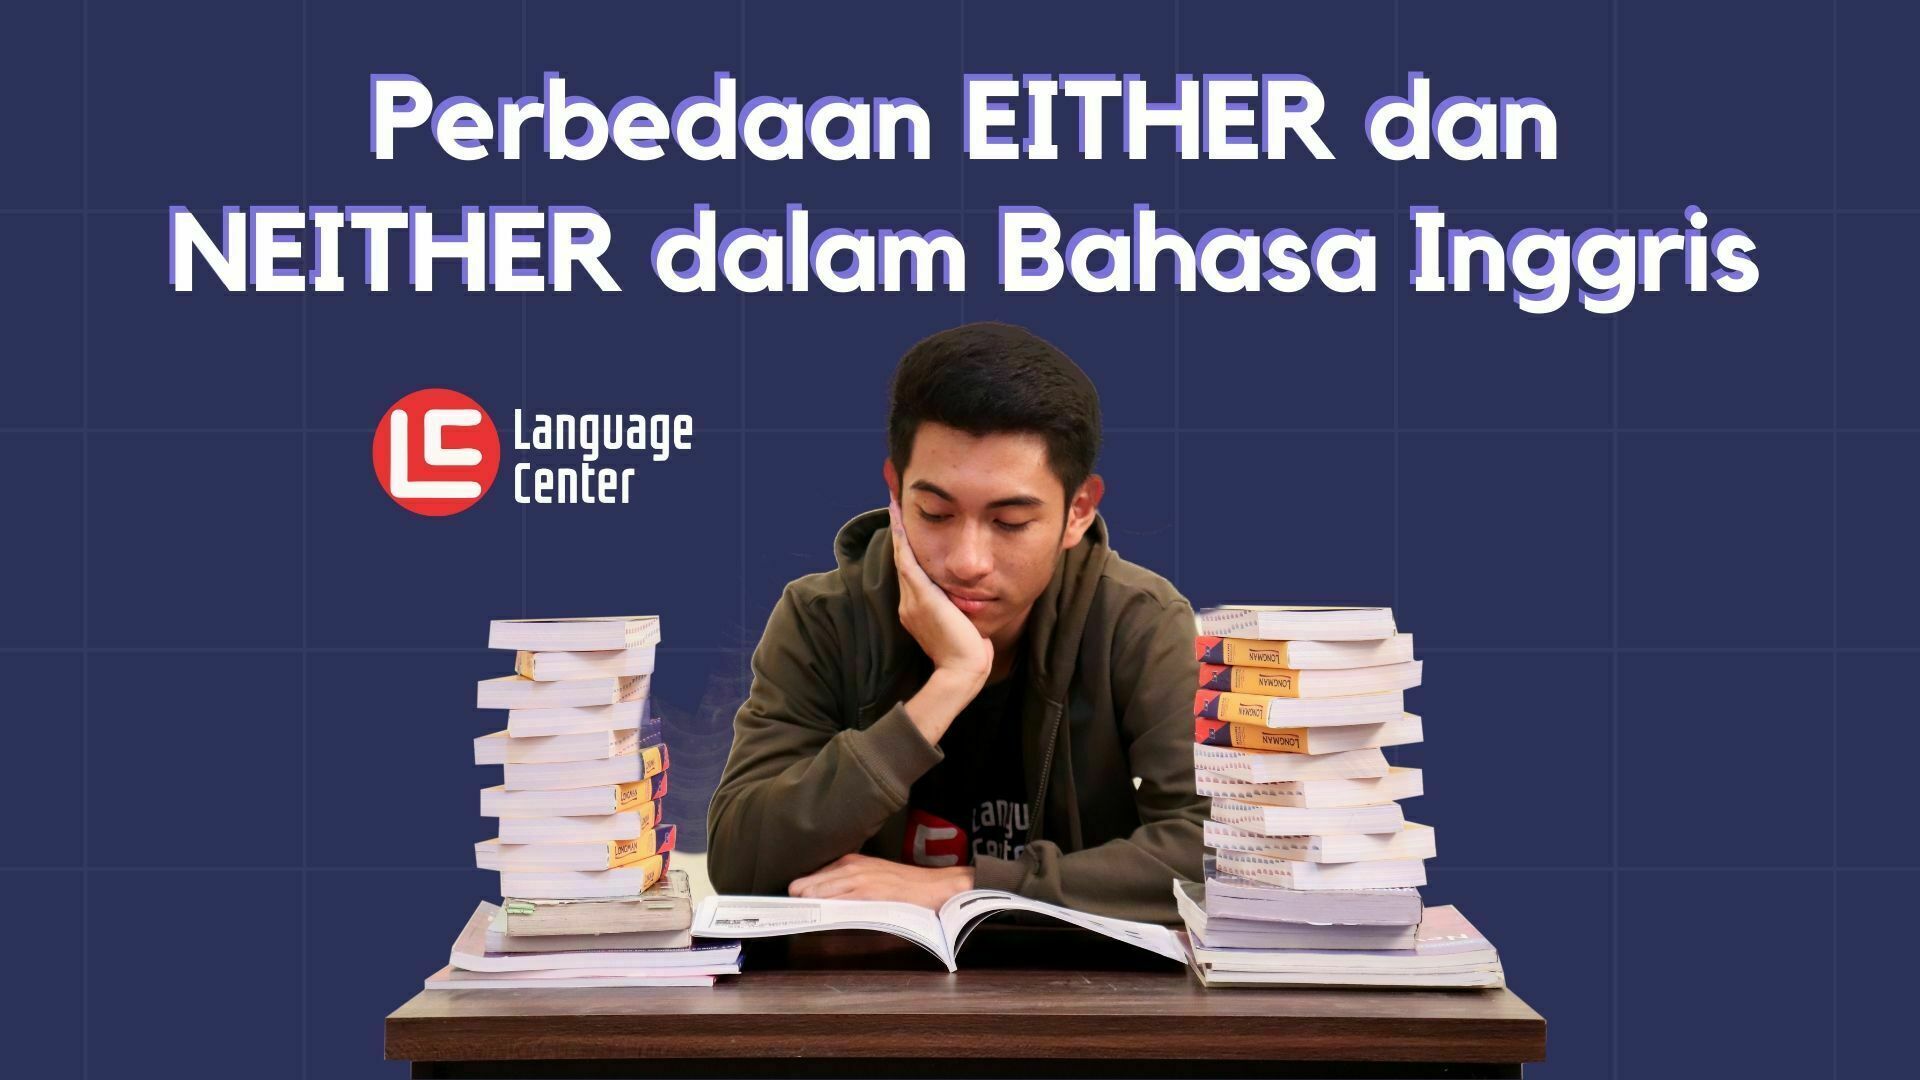 Perbedaan EITHER dan NEITHER dalam Bahasa Inggris